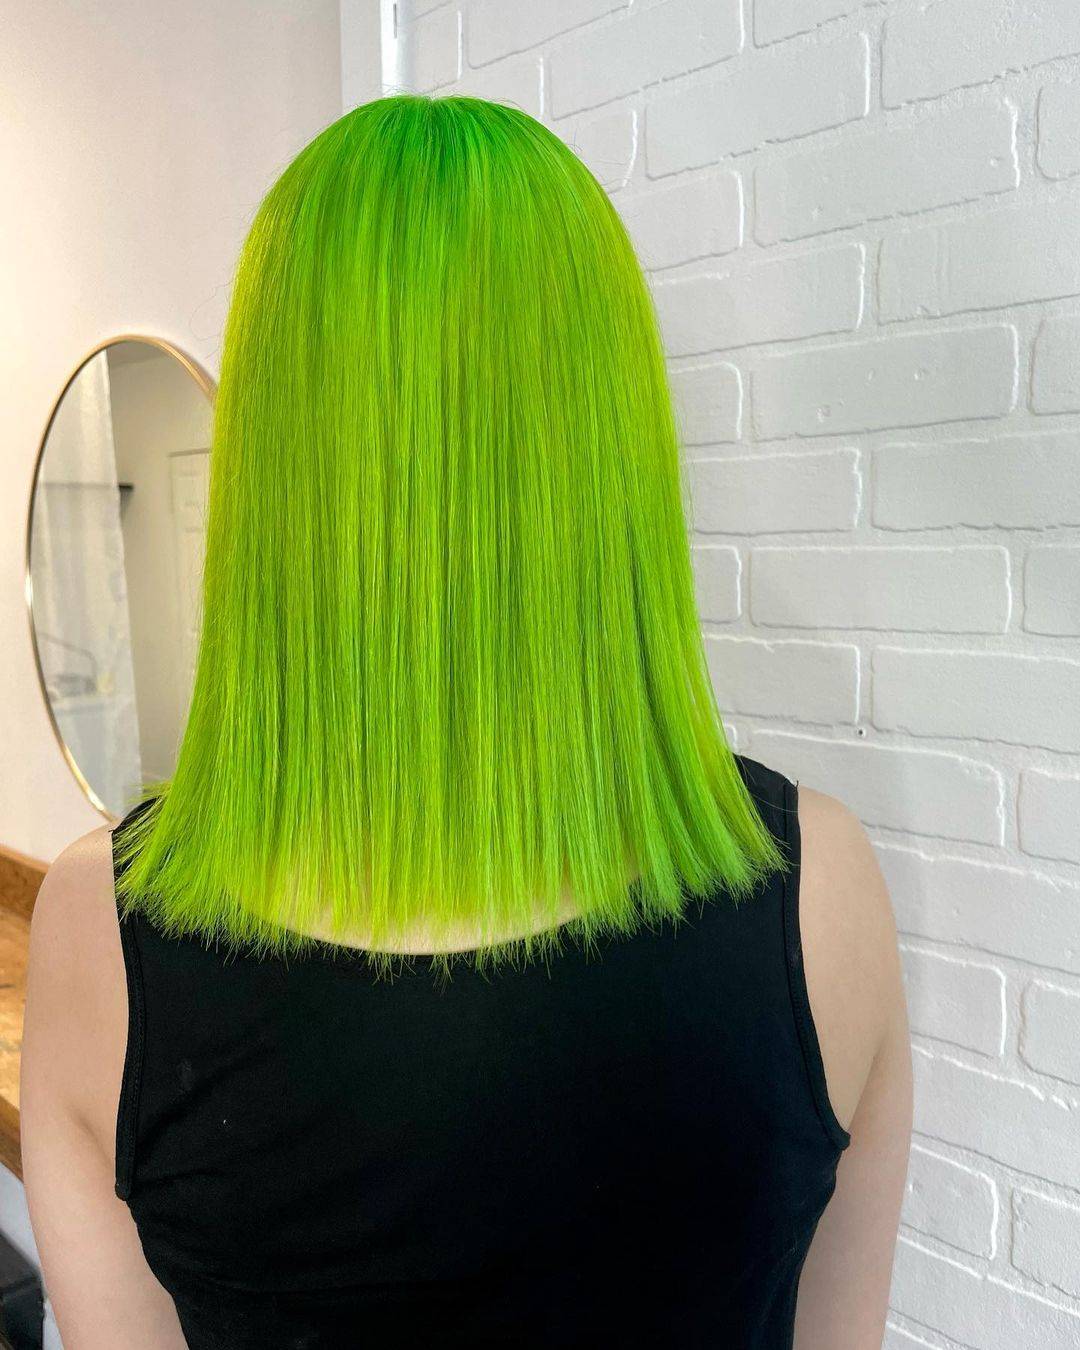 Green Hair color 361 face shape | green hair color | green hair color for women Green Hair Color ideas